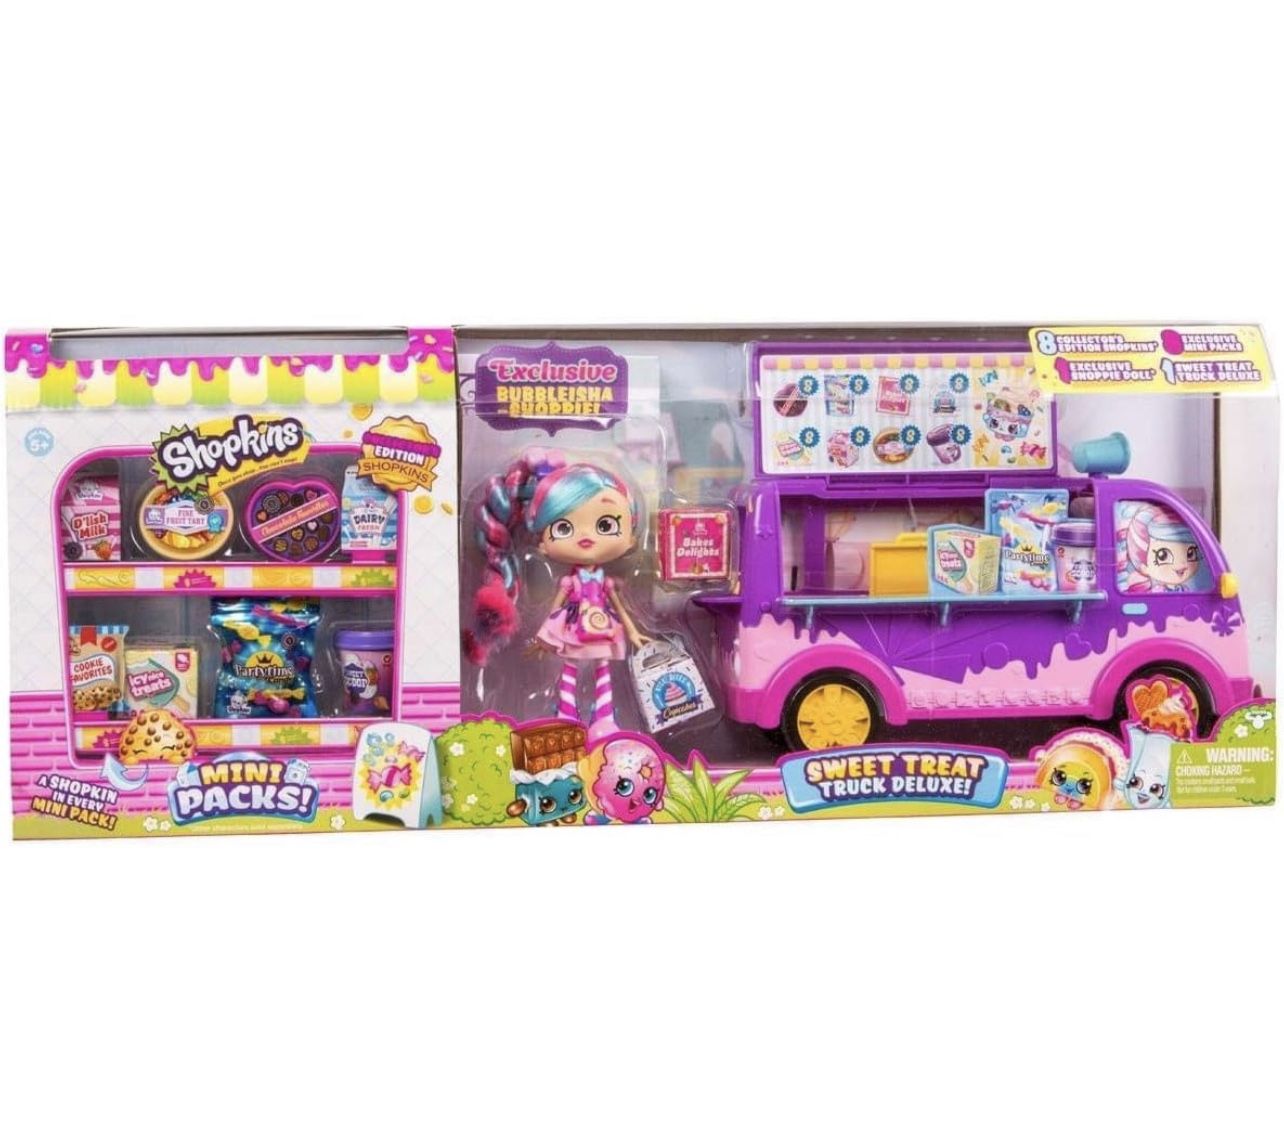 SHOPKINS Sweet Treat Truck Deluxe Playset - NEW - Exclusive BUBBLEISHA Shoppie 